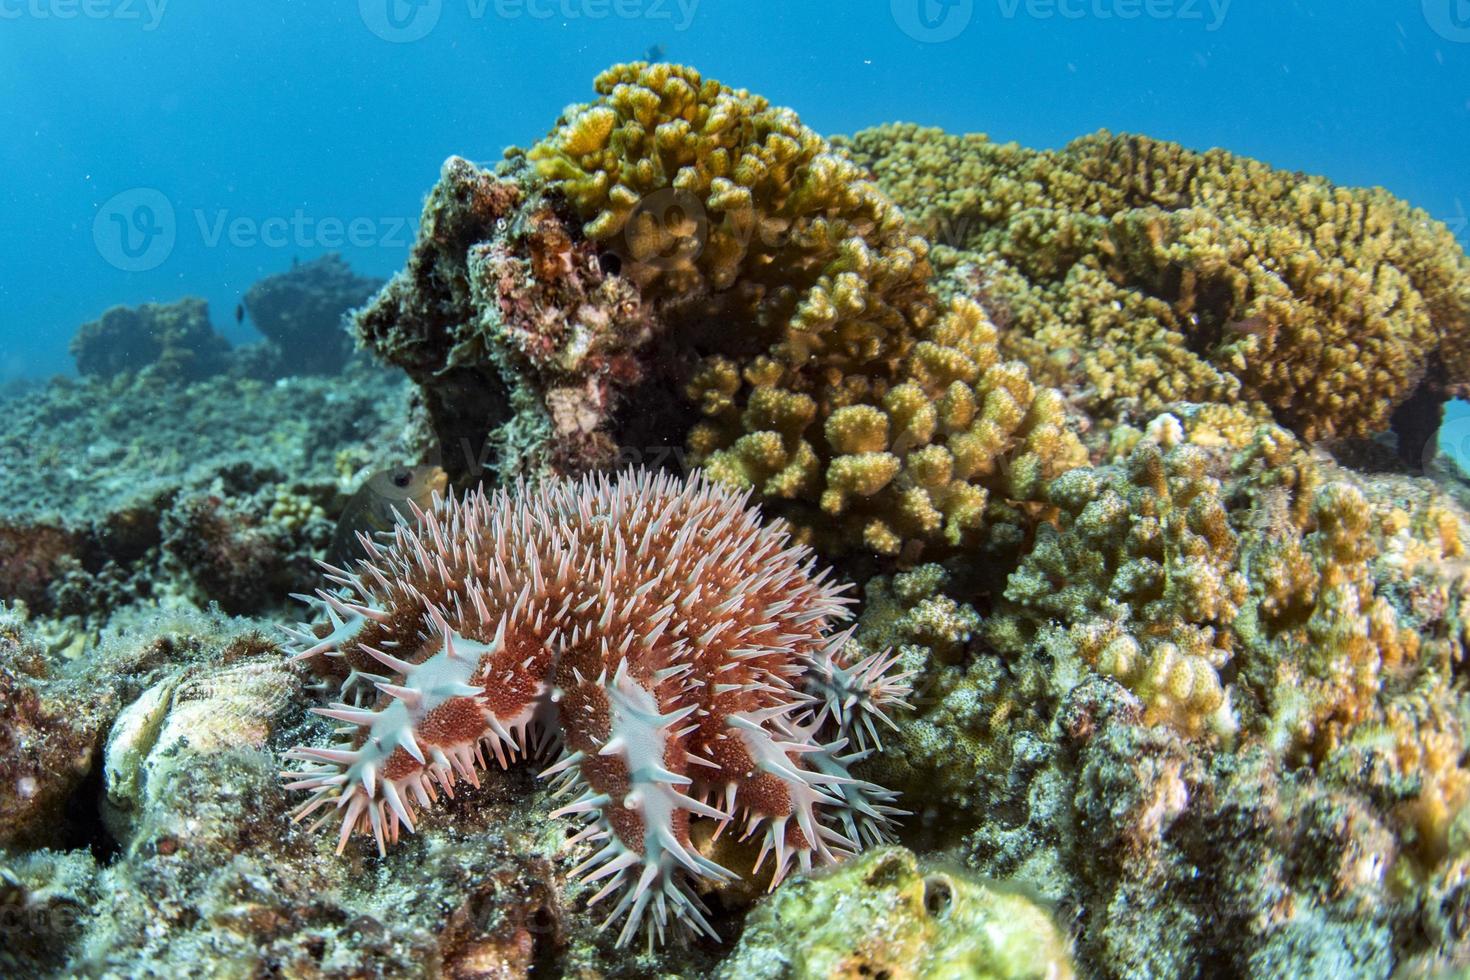 Sea star crown of thorns destroy corals photo